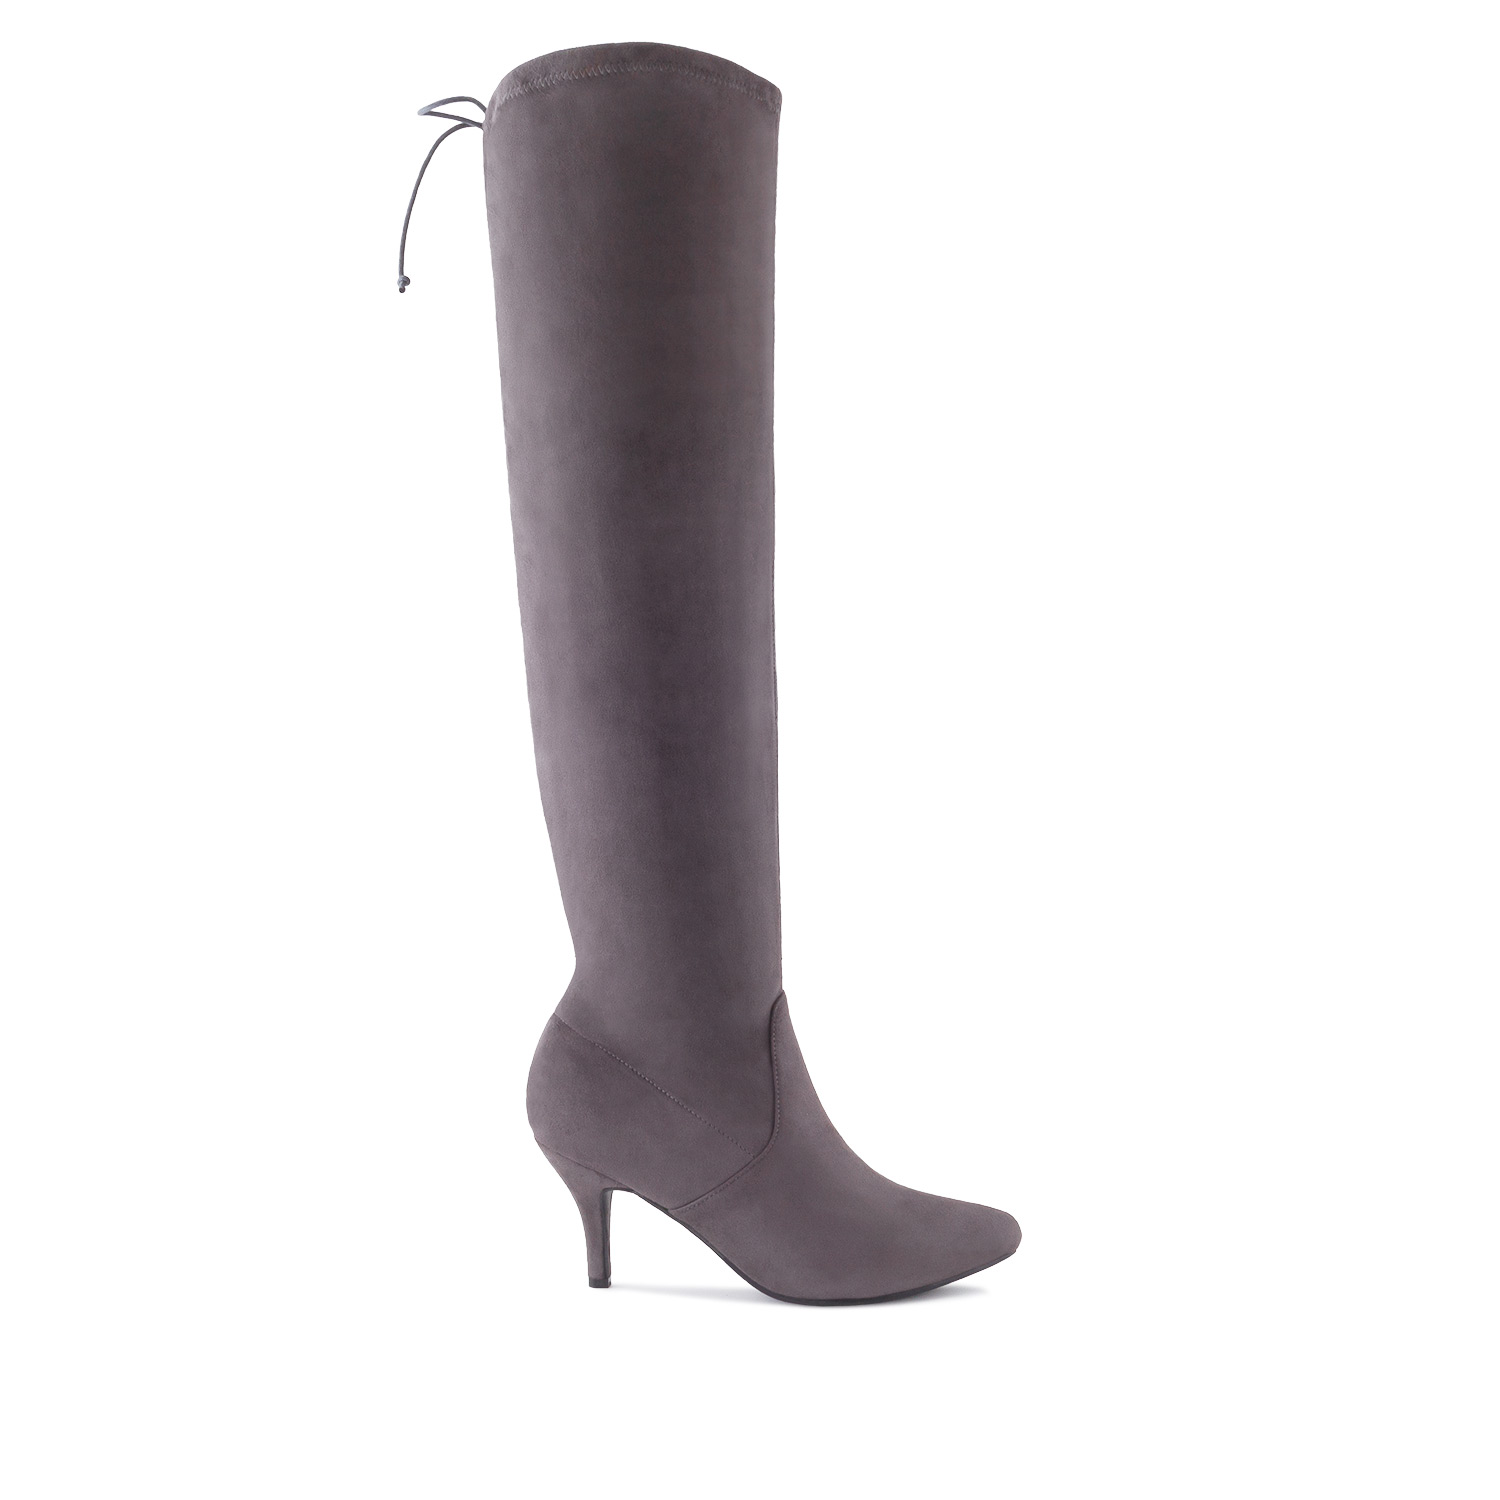 Calf High Boots in Grey Suede - Women 